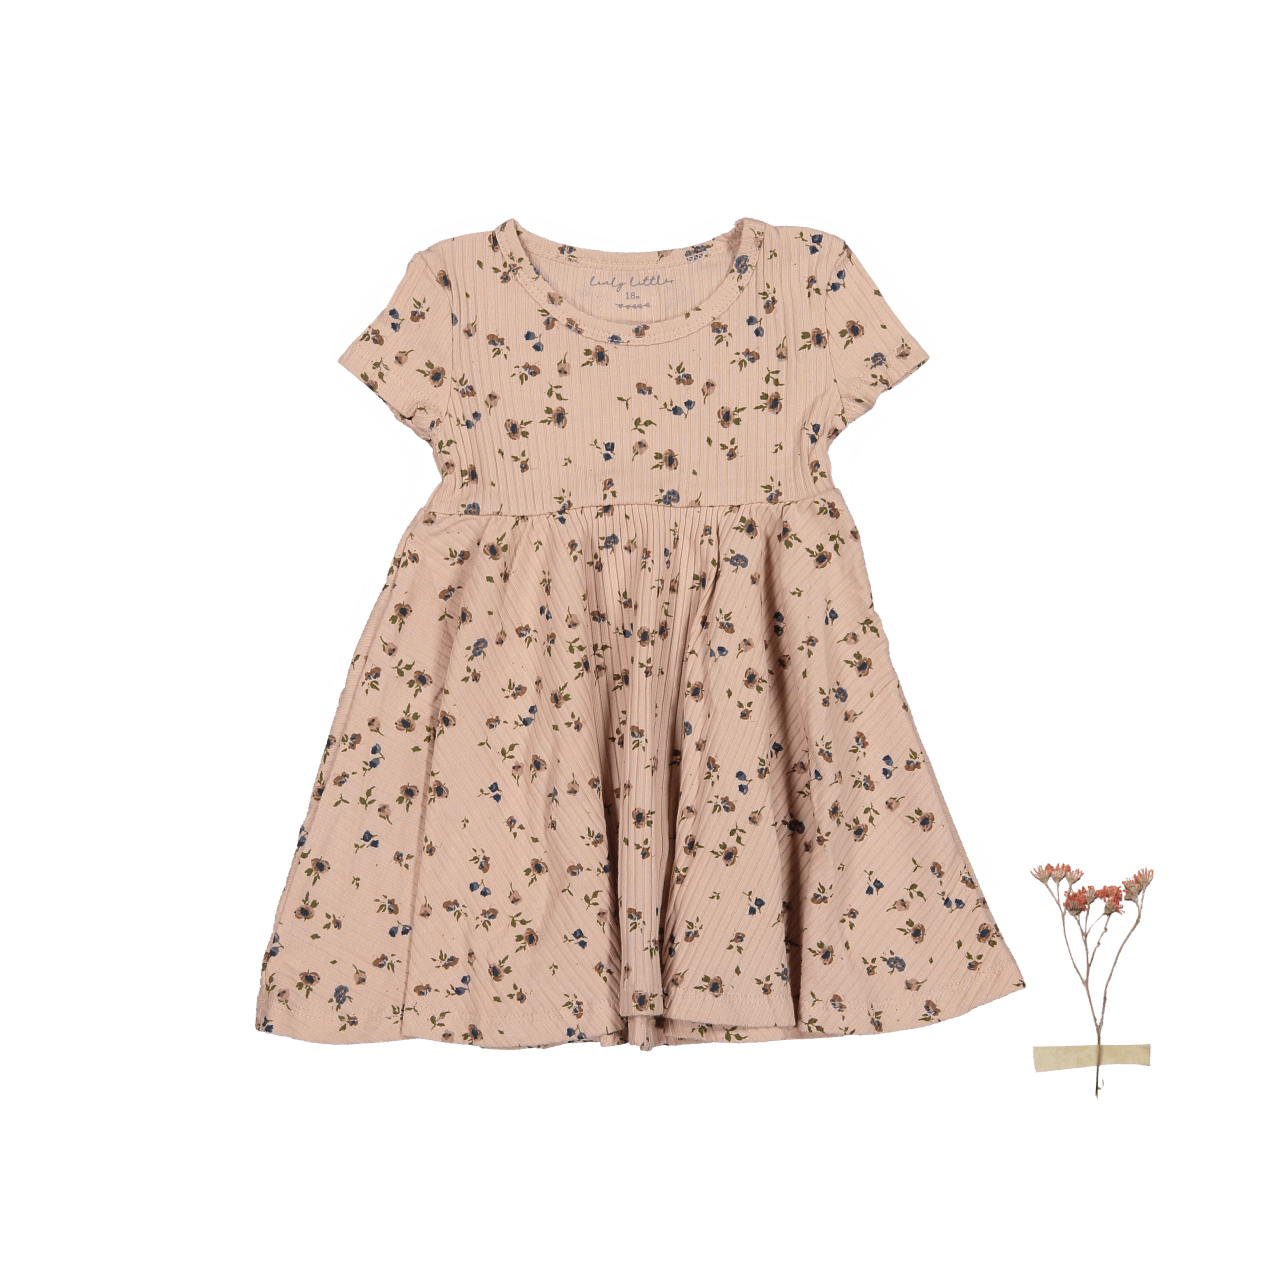 The Printed Short Sleeve Dress - Floral Blush